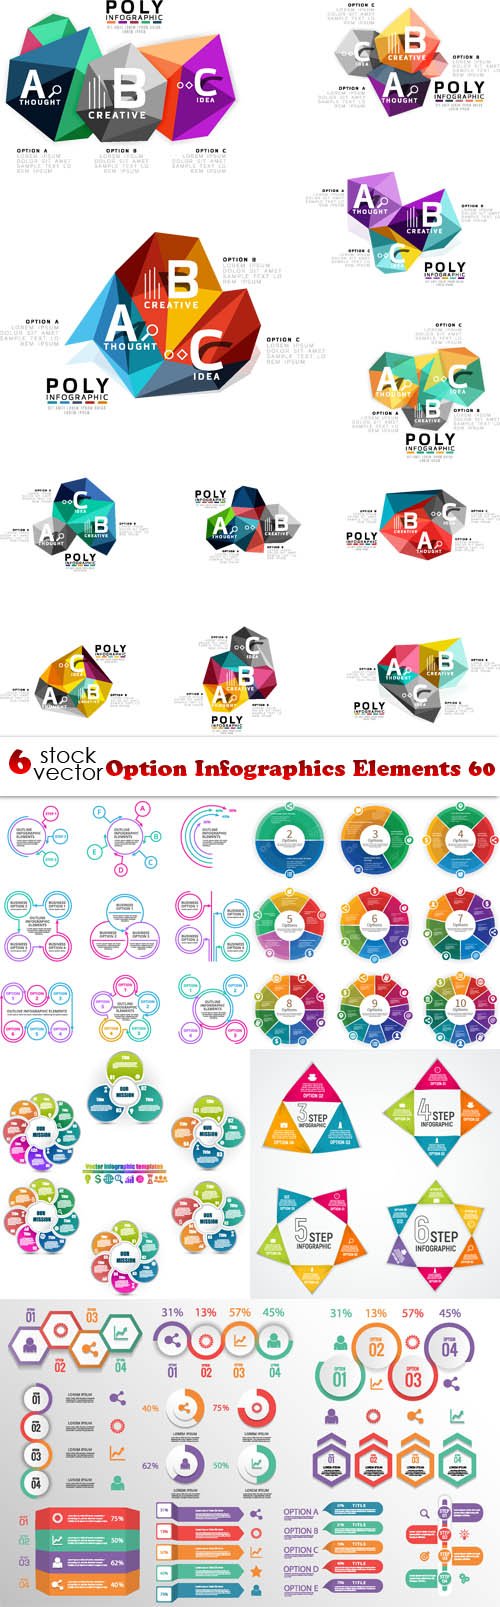 Vectors - Option Infographics Elements 60